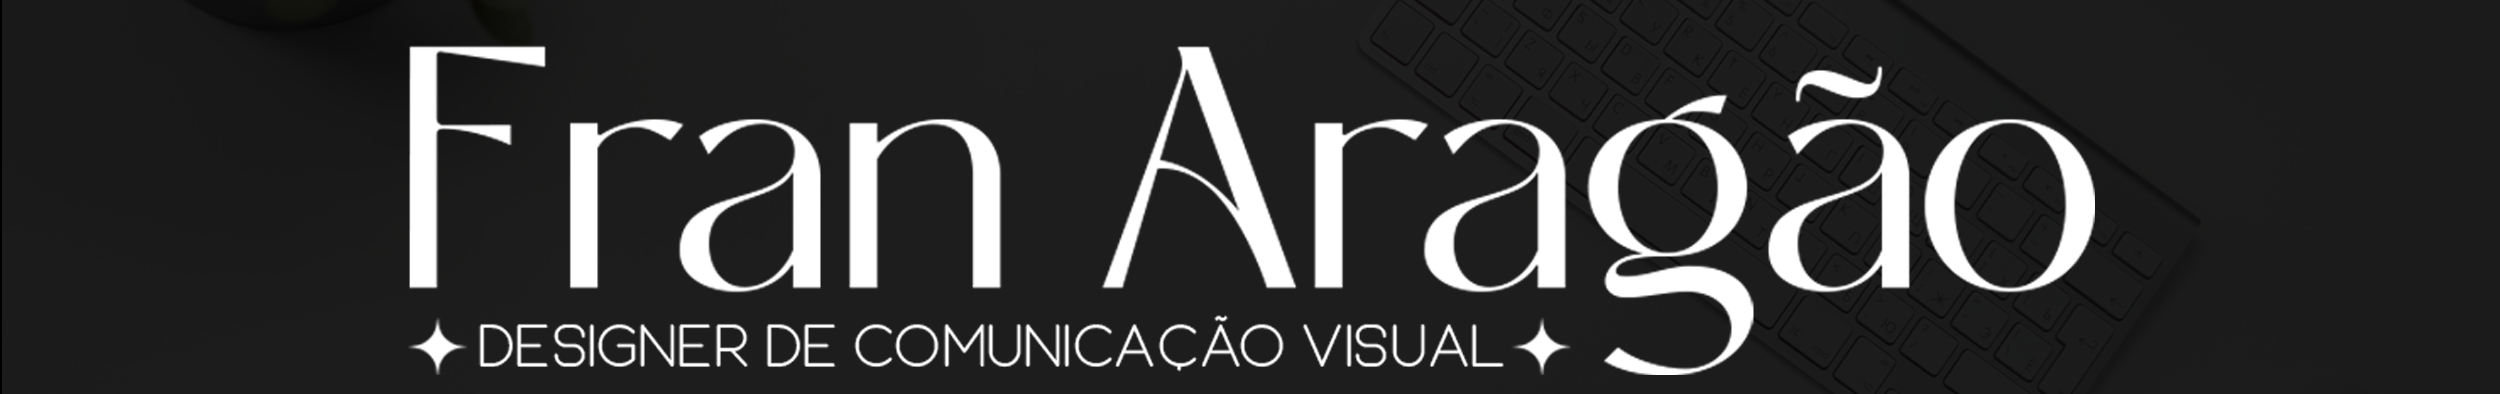 Francielly Aragão's profile banner